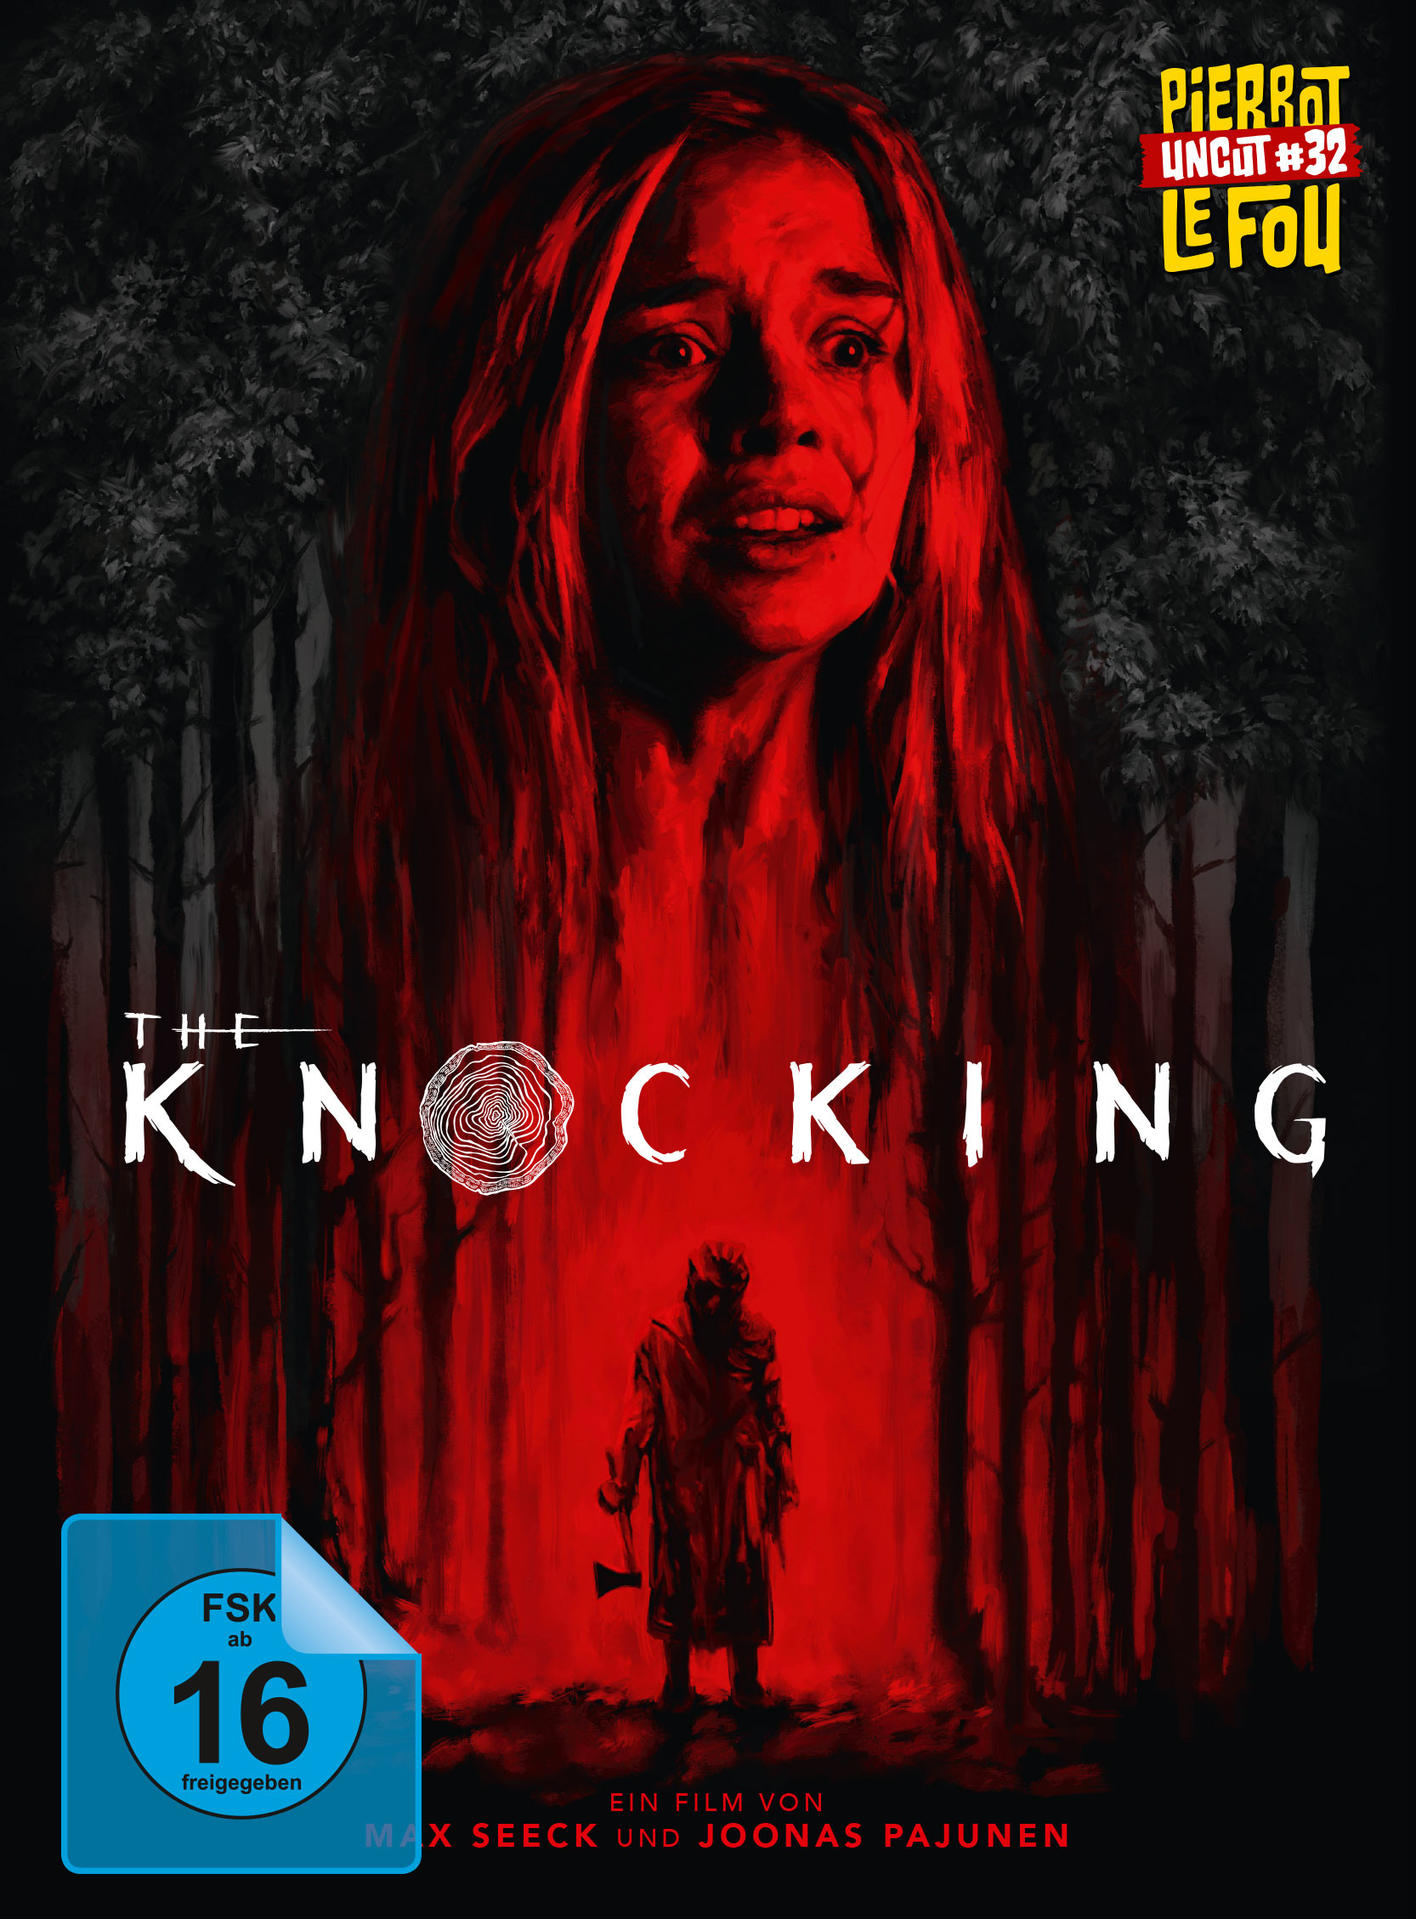 Mediabook DVD + (uncut) The Knocking-Limitierte Edition Blu-ray